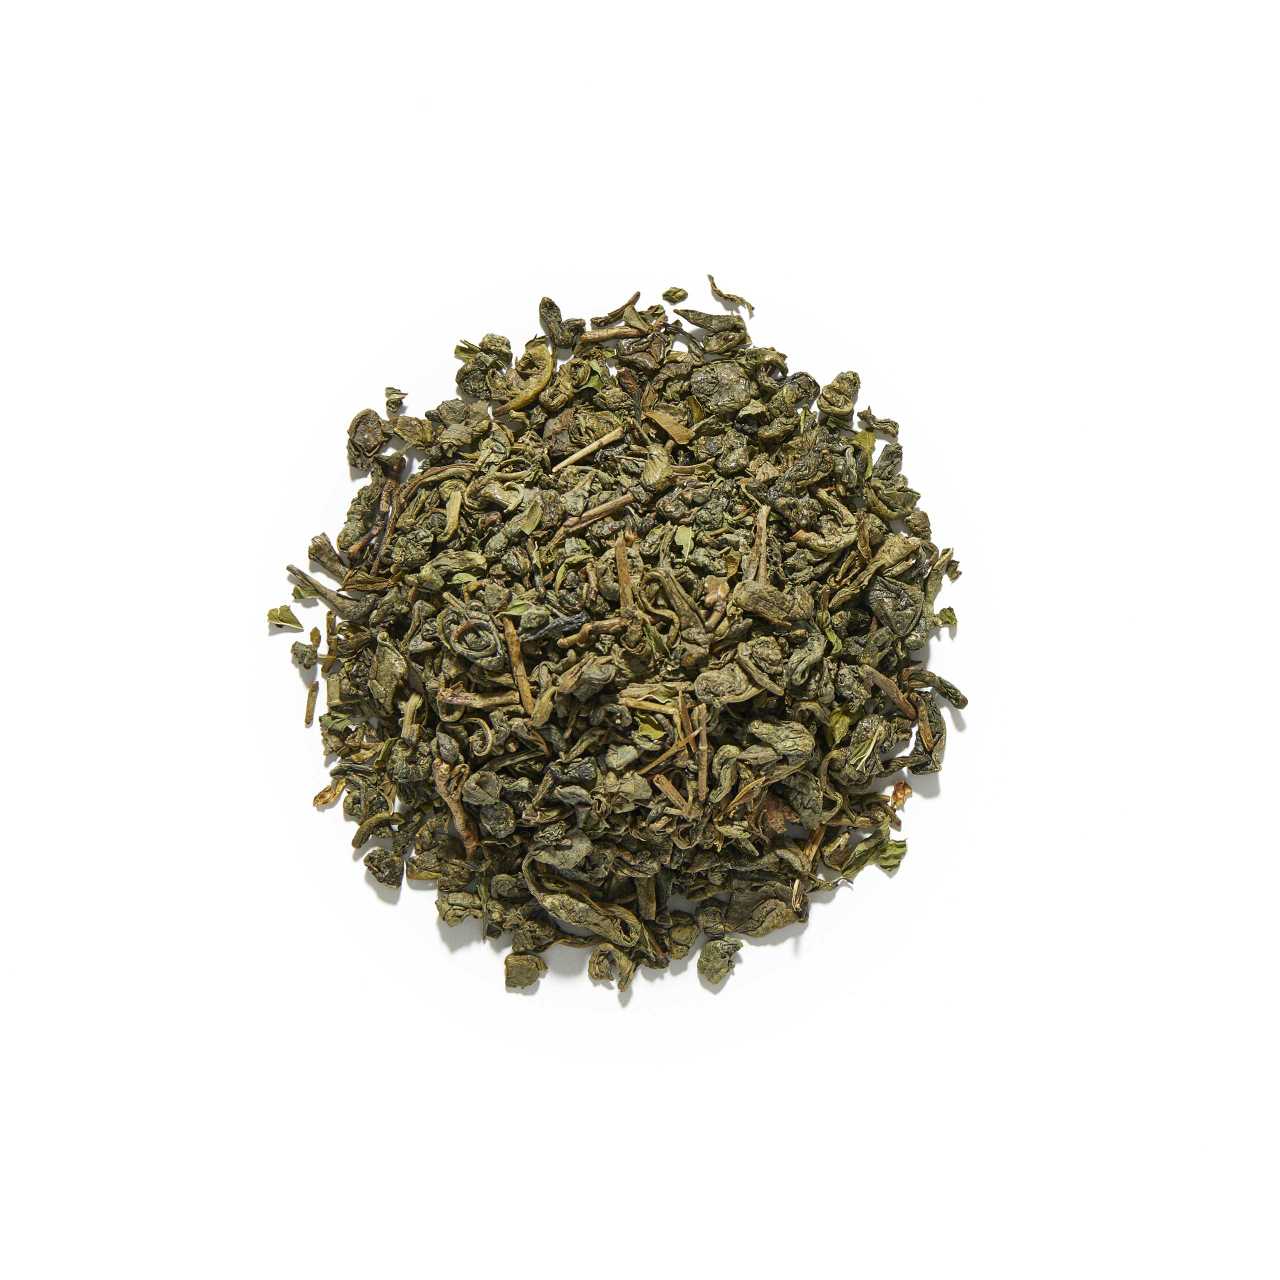 Menthos Gunpowder Loose Leaf Tea arranged in a circle